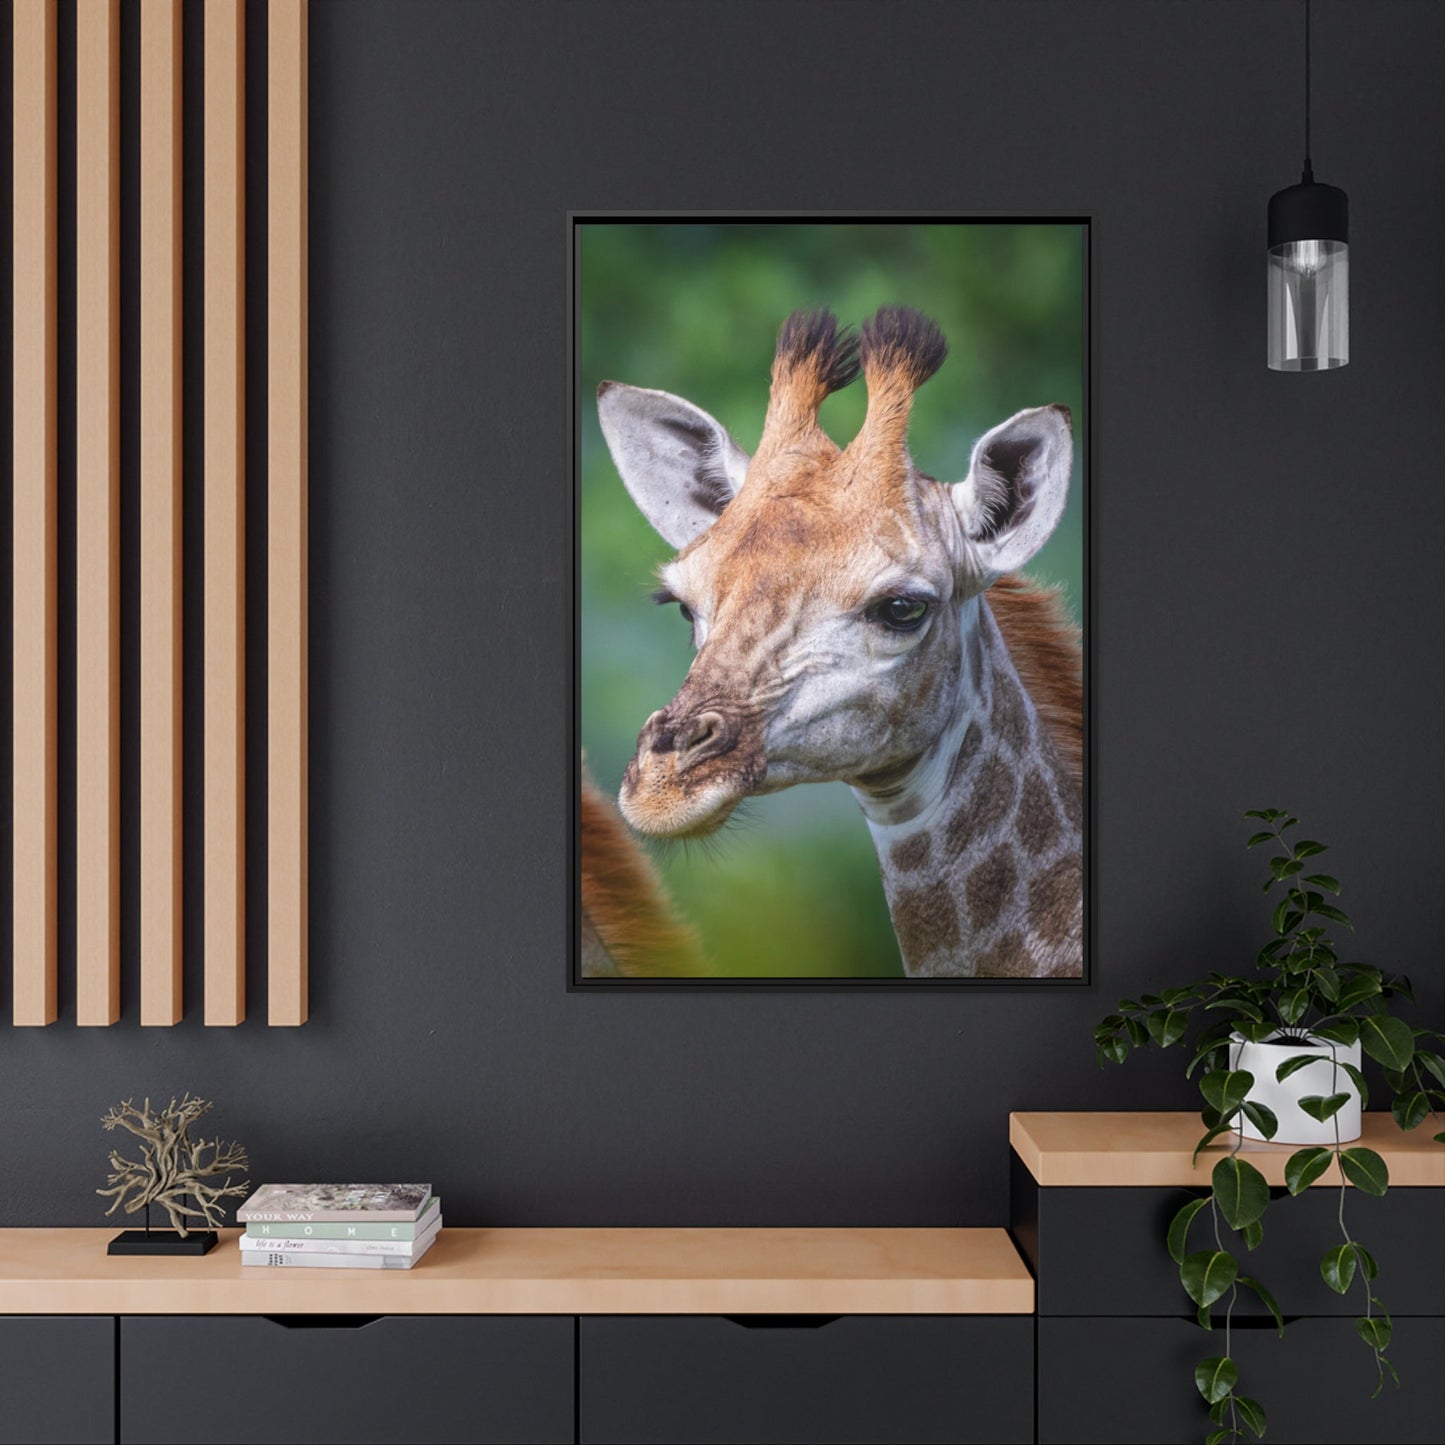 Regal Beauty: A High-Quality Canvas Print of a Giraffe's Elegance